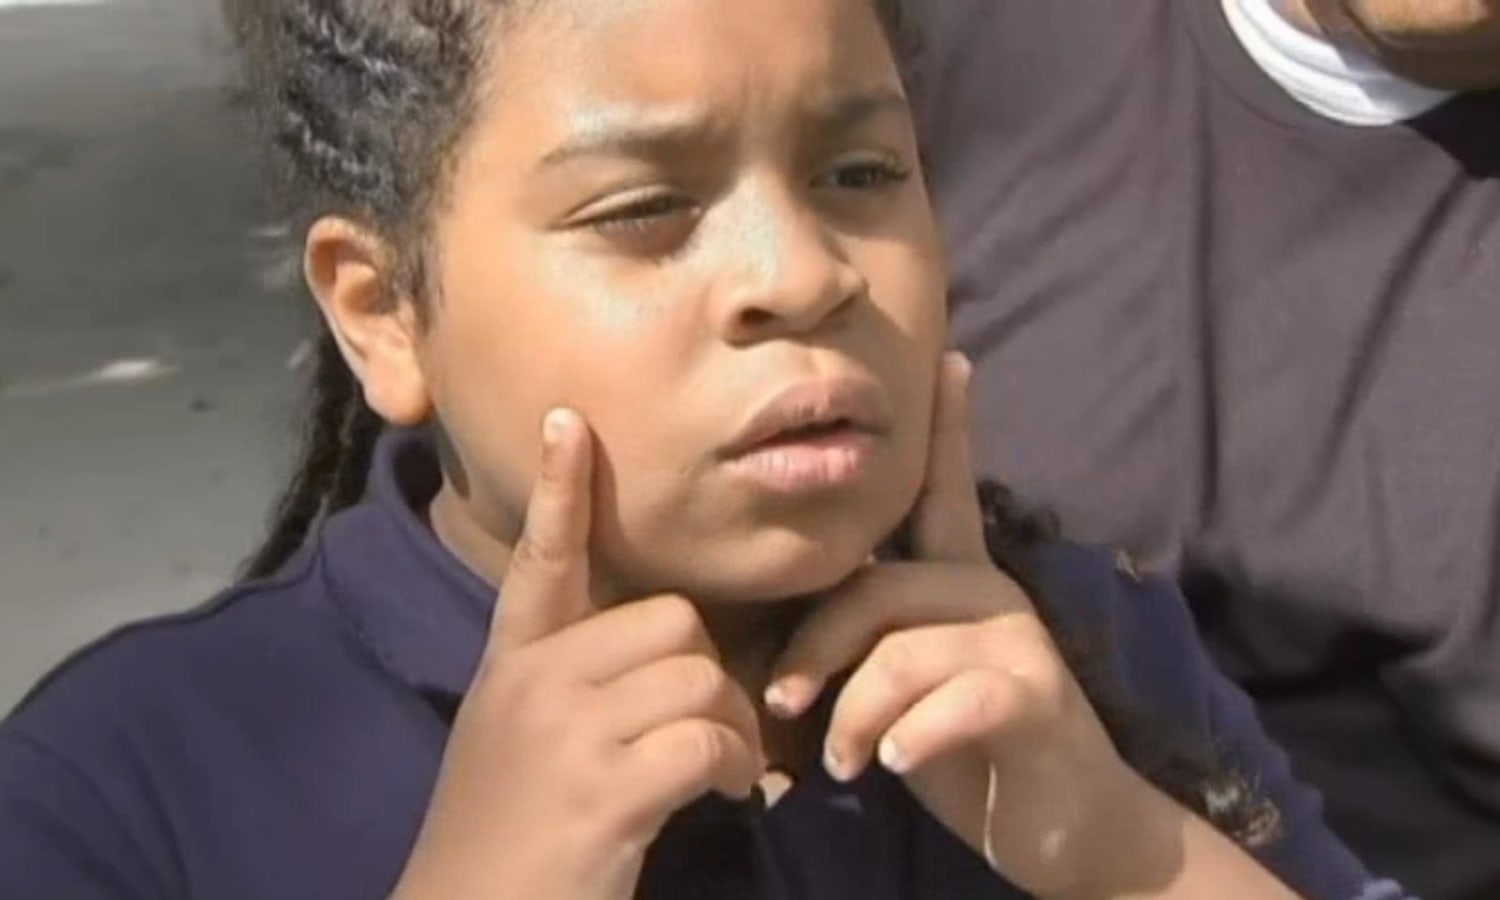 Parents consider suing after teacher tapes 6th grader's mouth shut, calls  it 'a joke